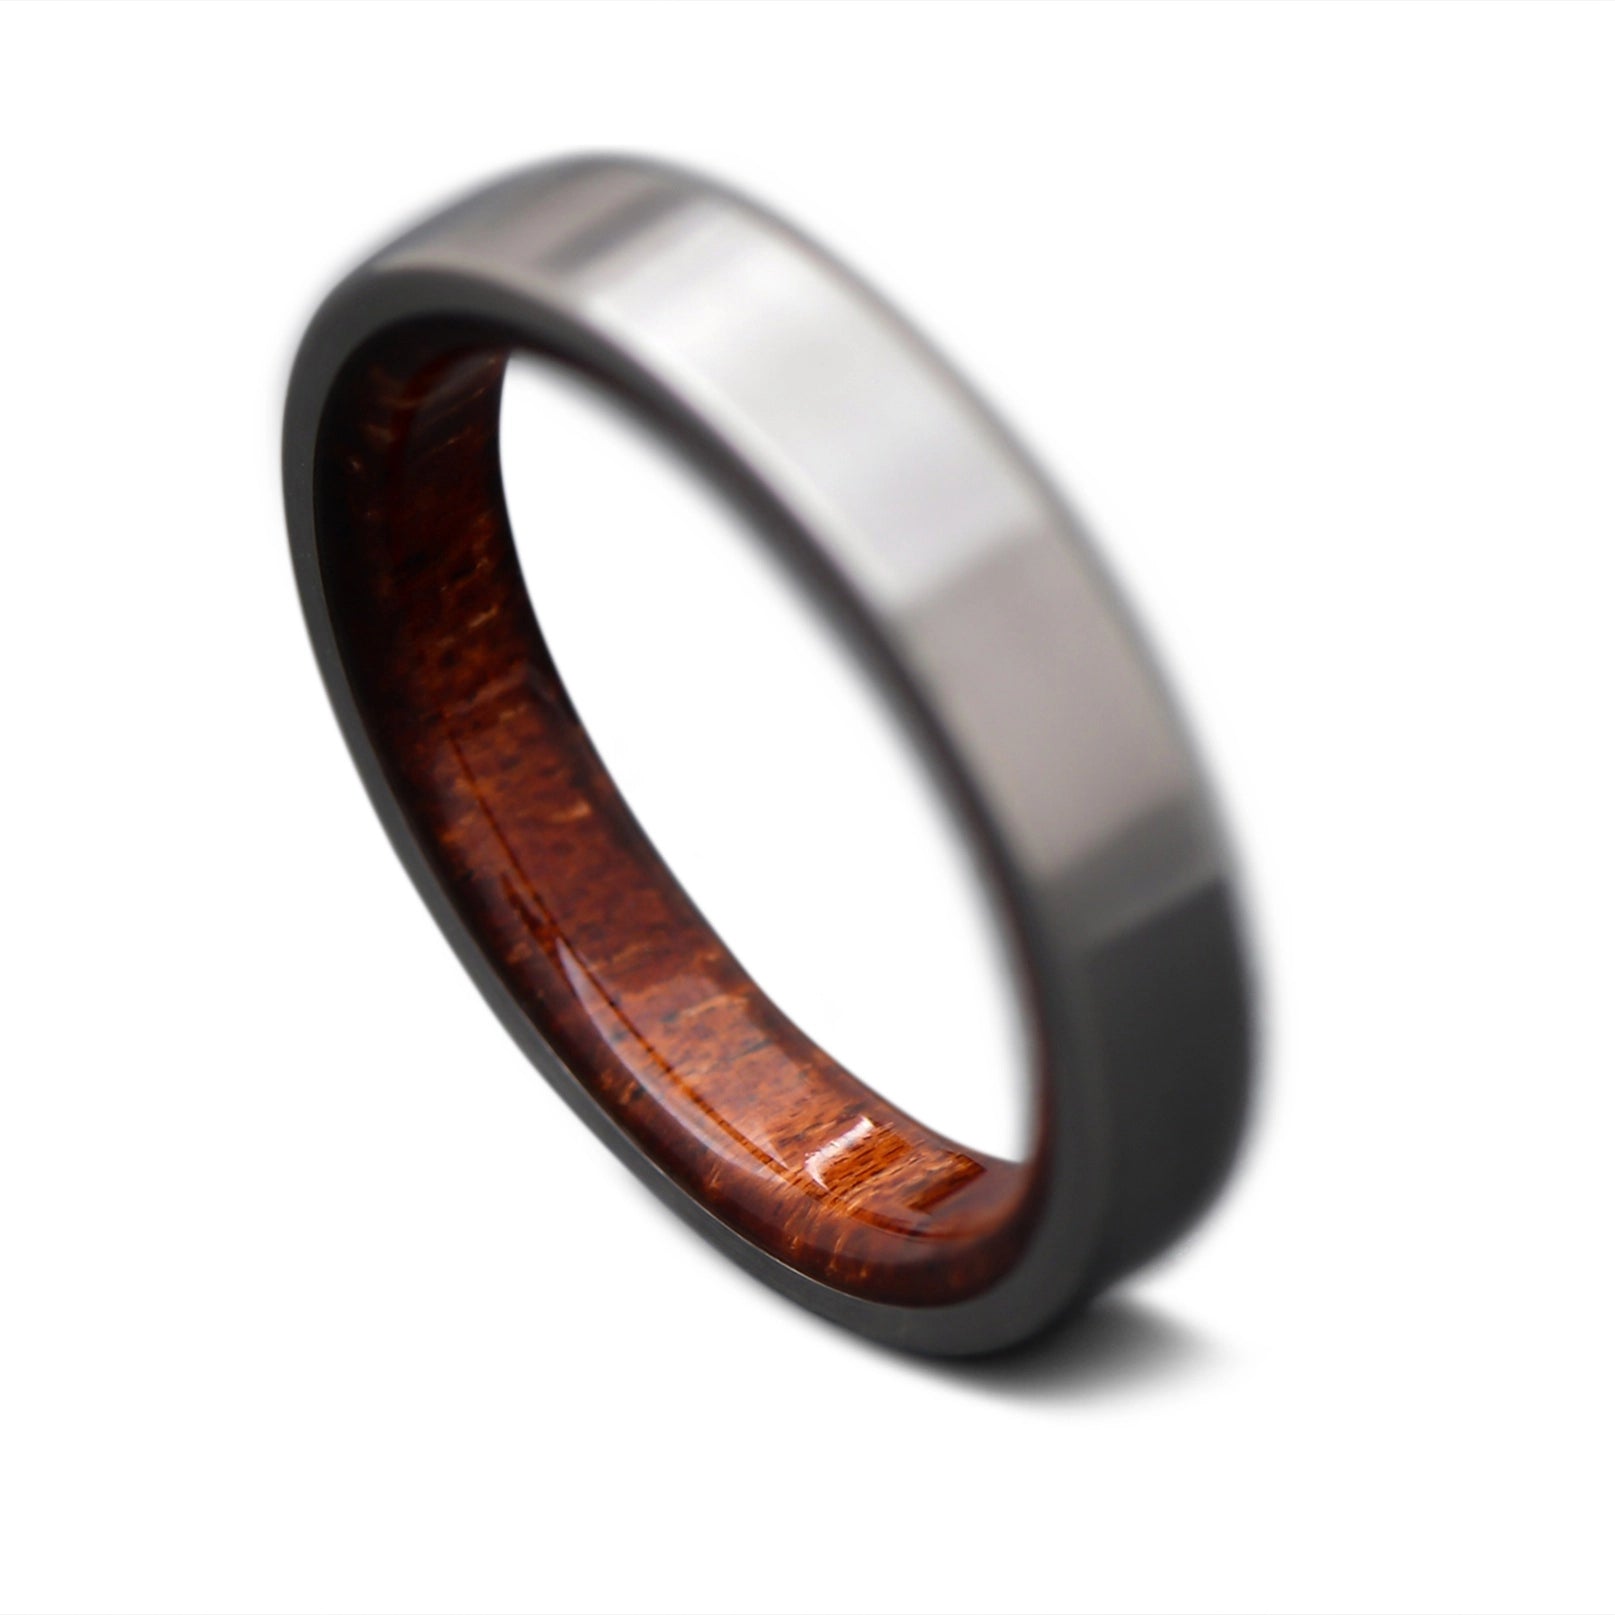 Titanium Core ring with Mahogany inner sleeve, 4mm -THE TITAN